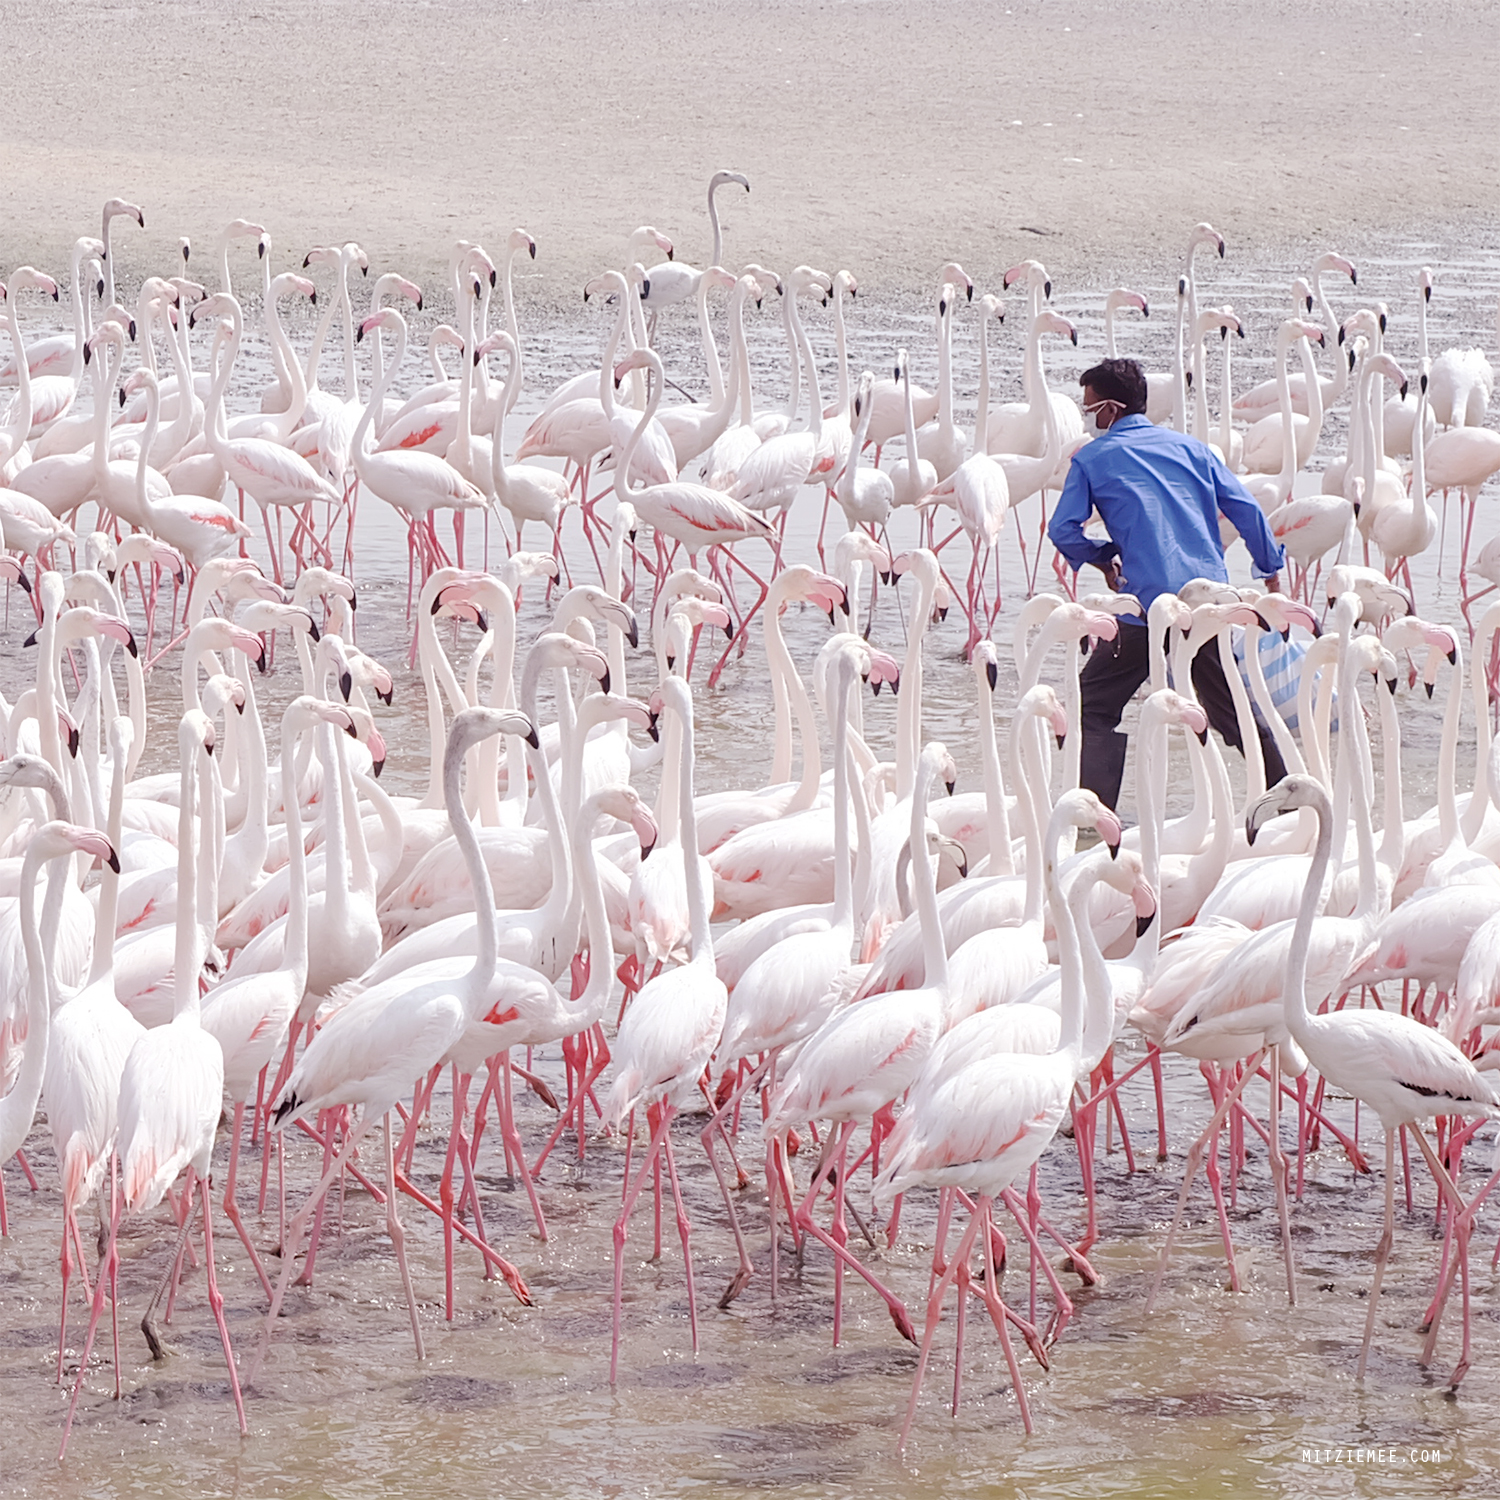 Flamingos at Ras Al Khor Wildlife Sanctuary, Dubai